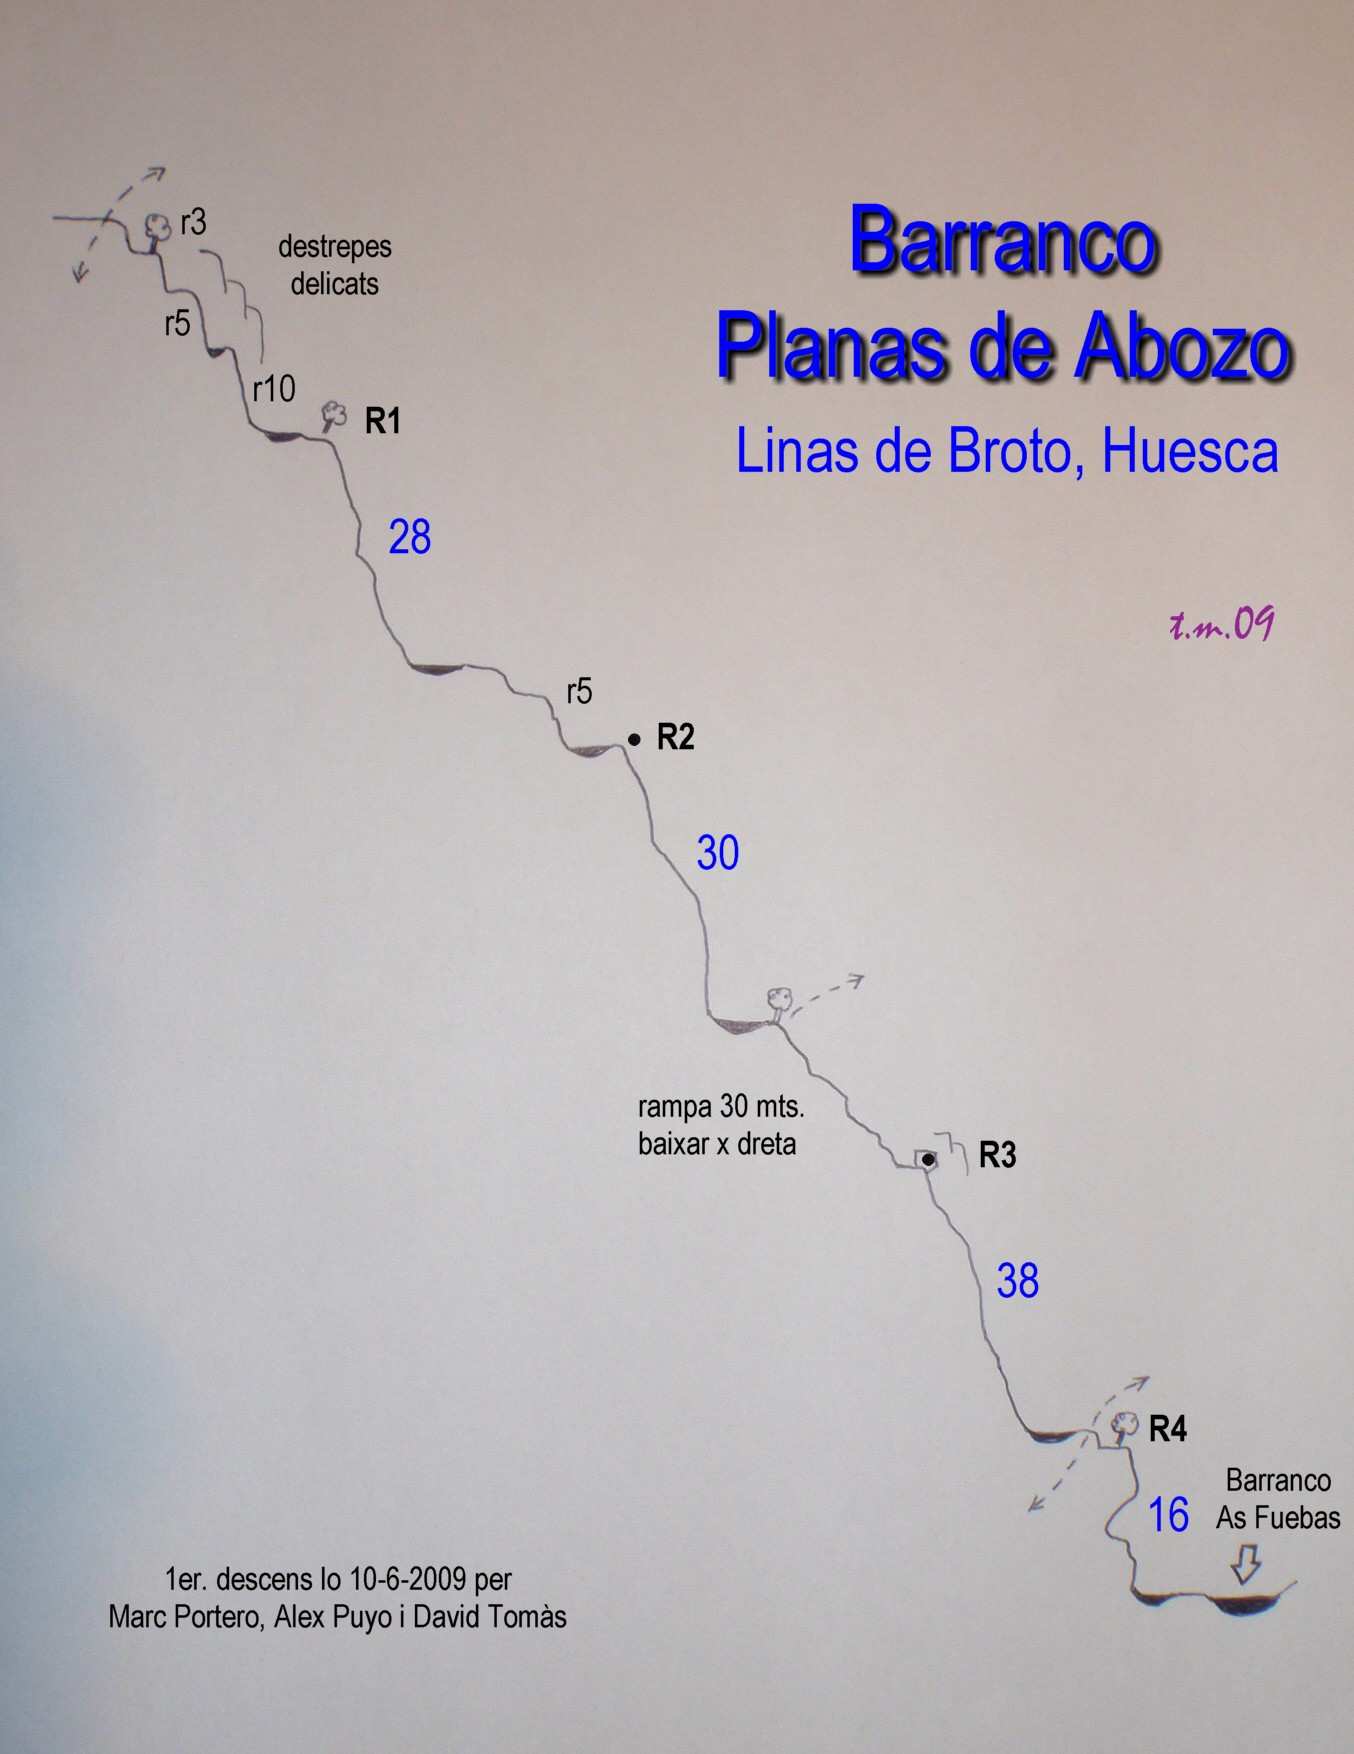 Barranco PLANAS DE ABOZO o de SUASO Cuerdas: 2x 40 mts. Horario de descenso: 1 a 1'30 horas Altura en inicio: 1700 mts. aproximadamente Desnivel de 200 mts. en 350 mts.